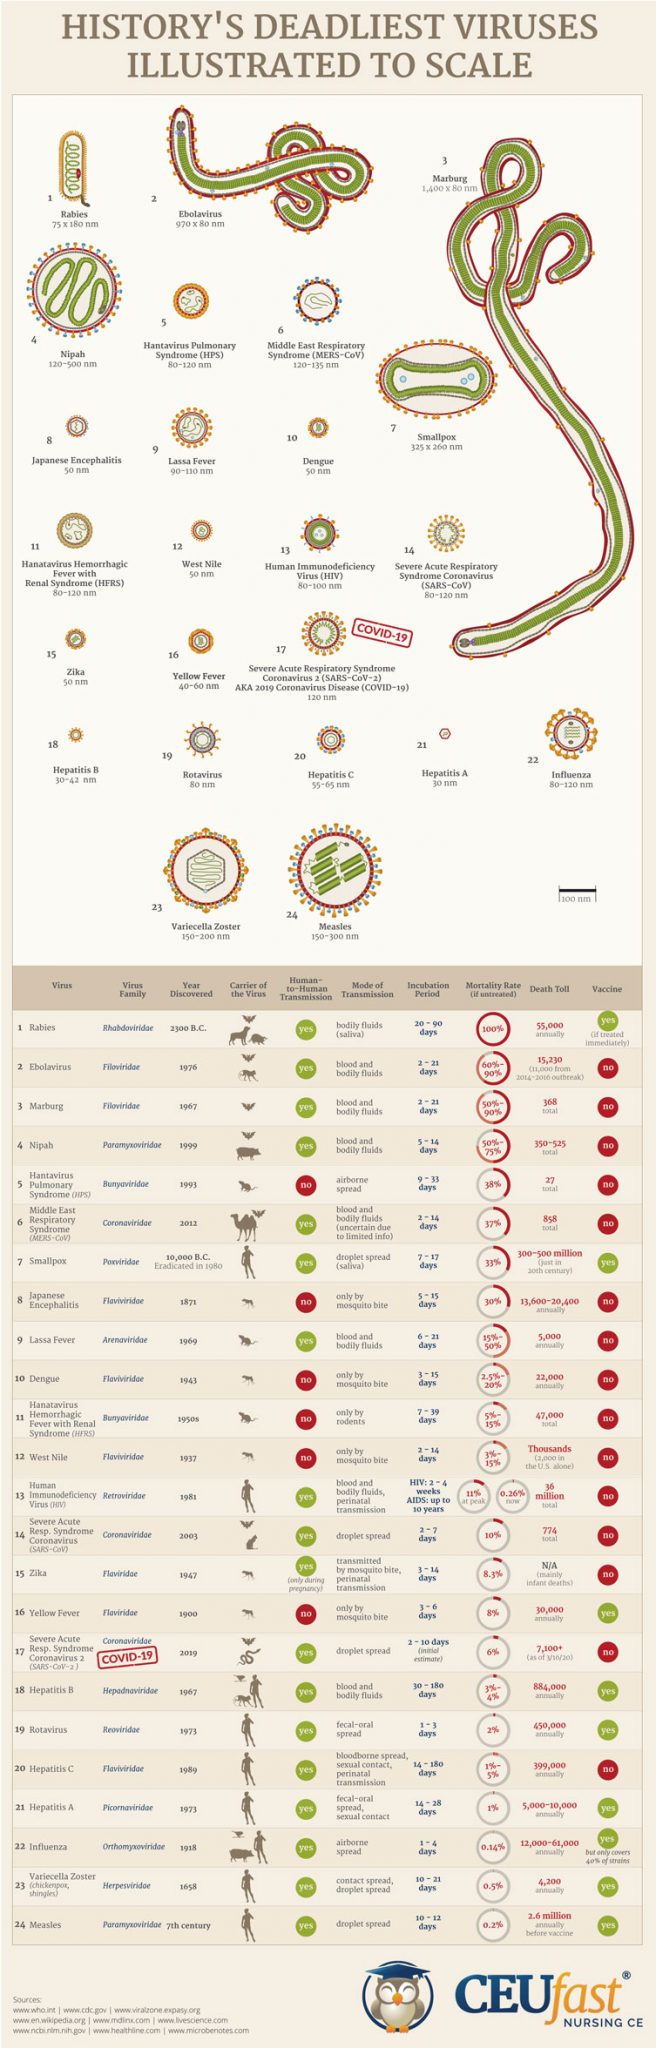 History Of Deadliest Viruses Infographic Accomplish With Spadaro